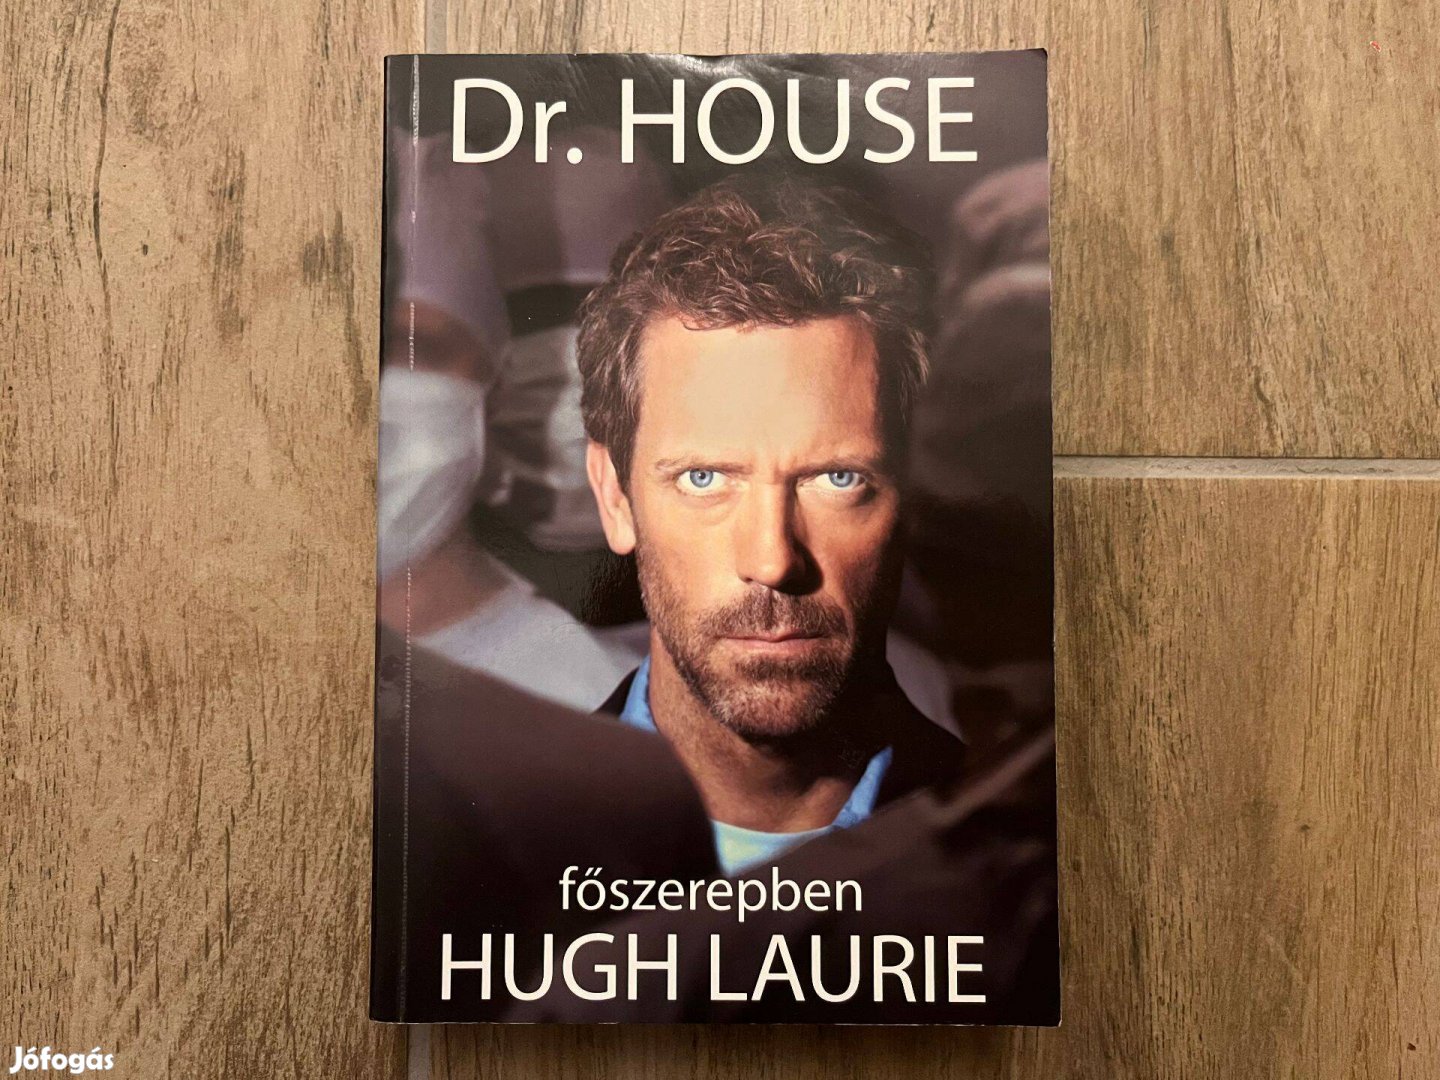 Paul Challen Dr. House - főszerepben Hugh Laurie